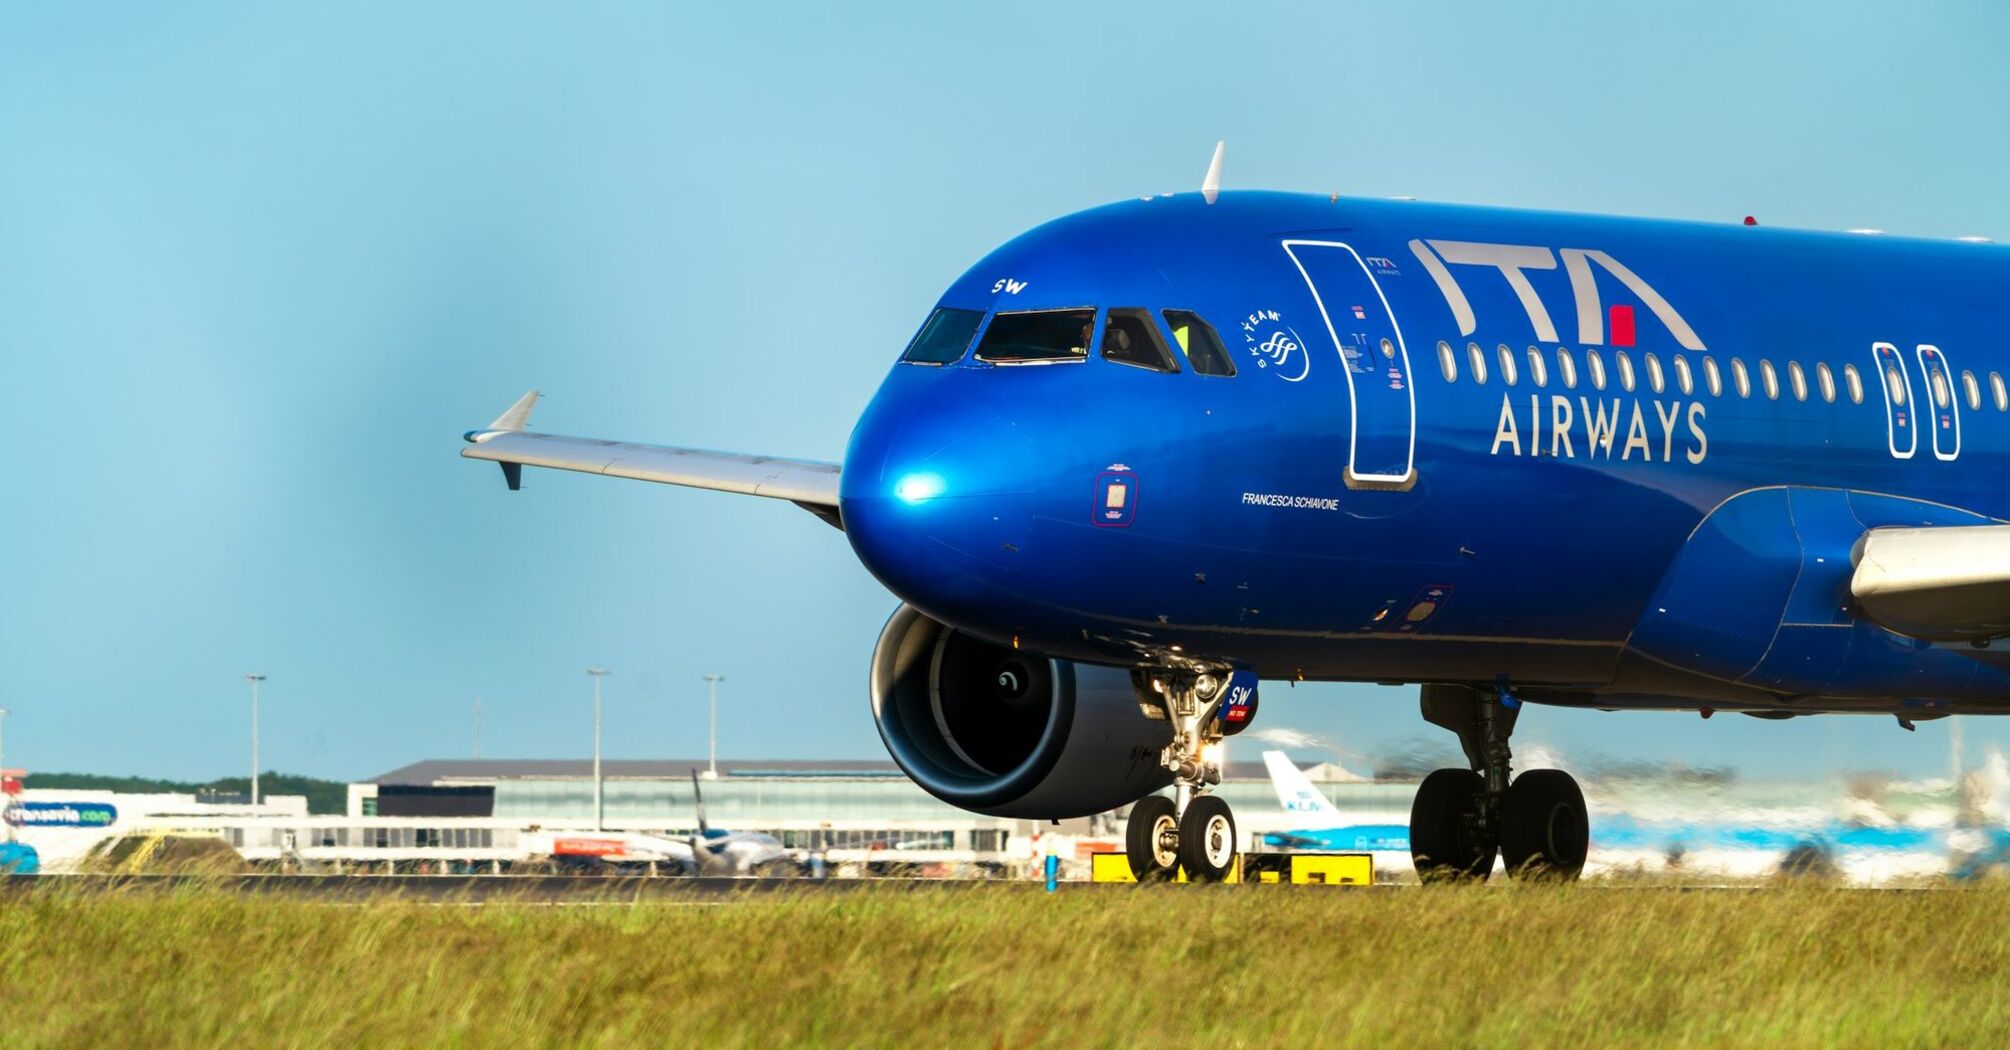 ITA Airways Airbus taxiing to the Polderbaan runway at Schiphol airport for departure